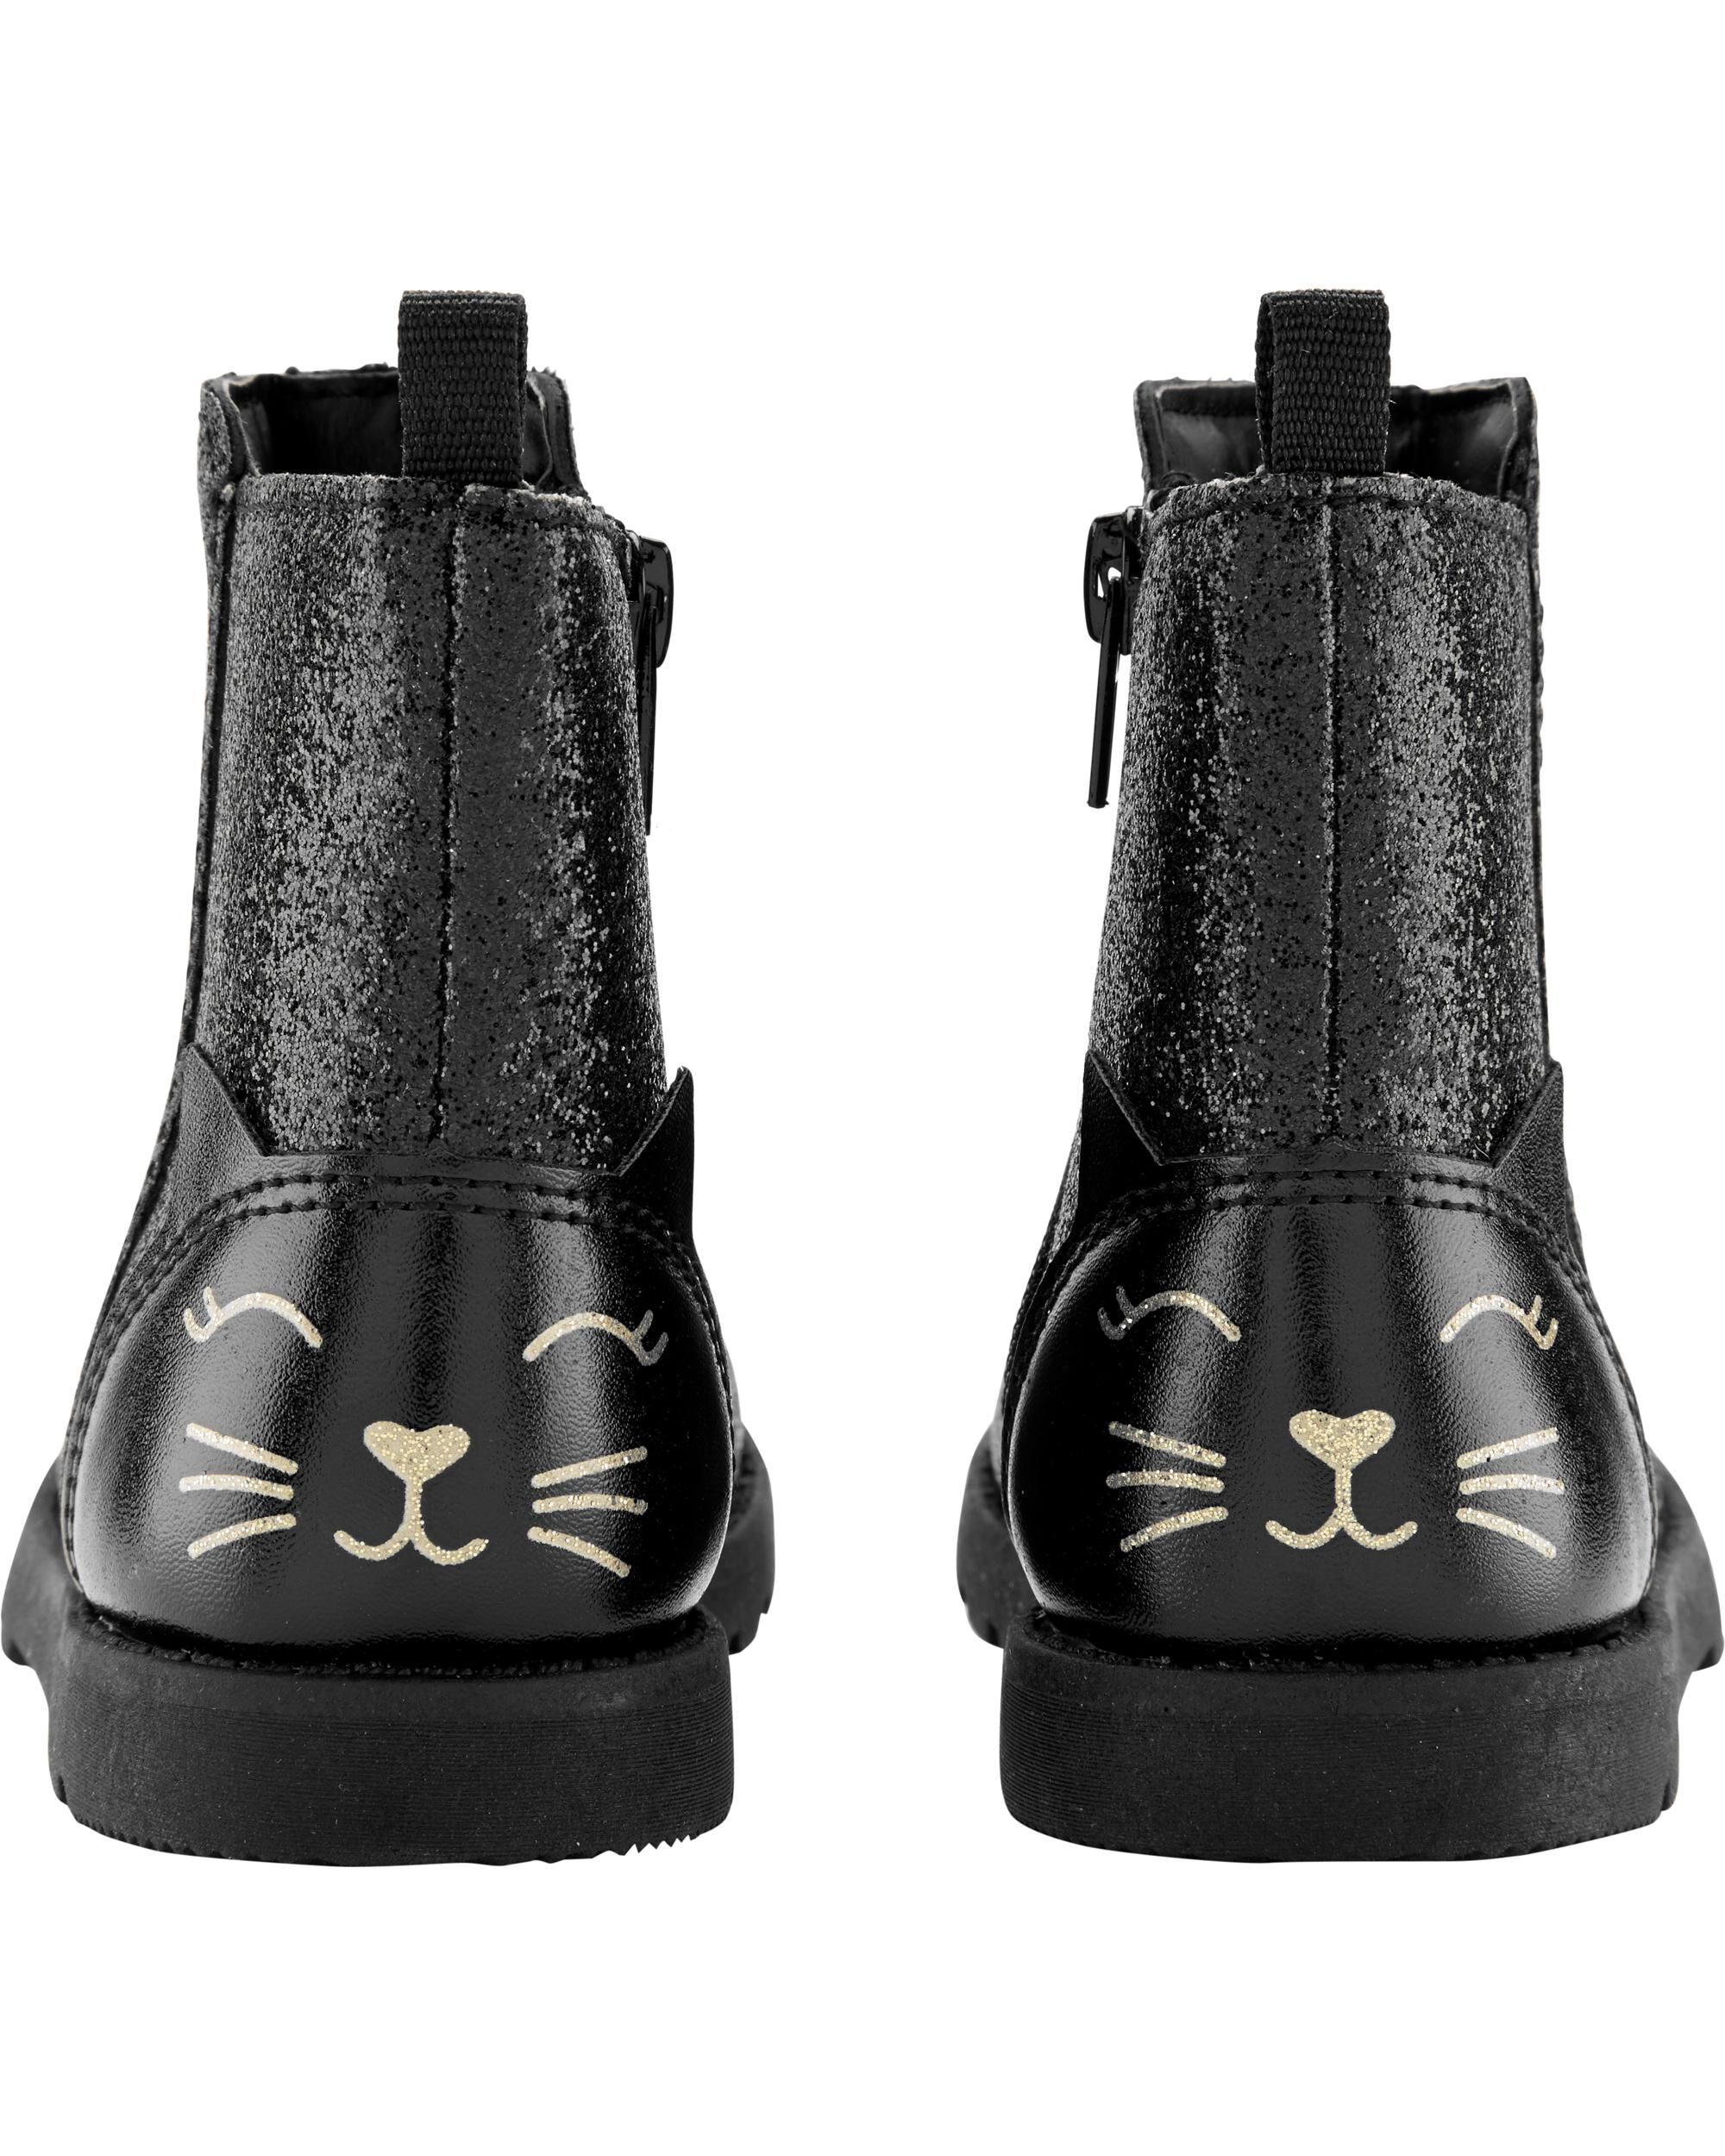 carters cat boots